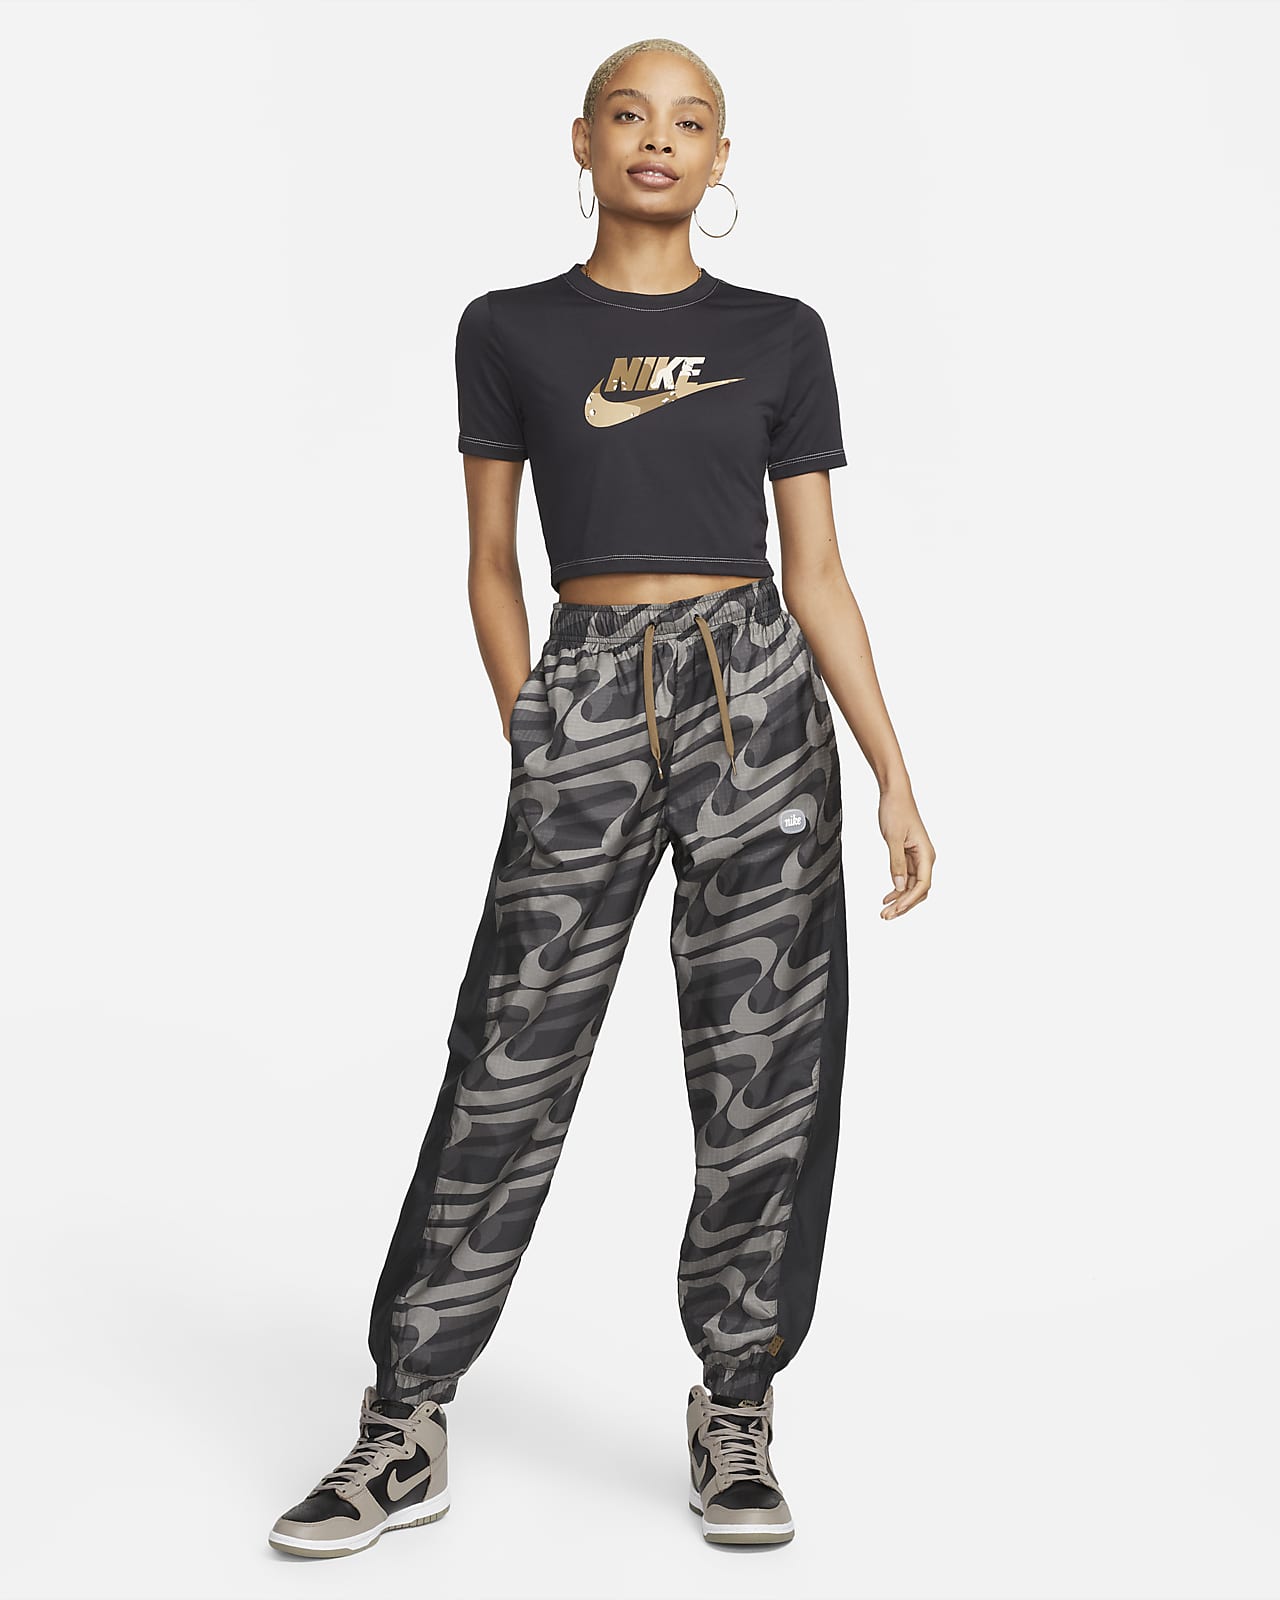 Nike Sportswear Women's Slim Fit Cropped T-Shirt. Nike.com